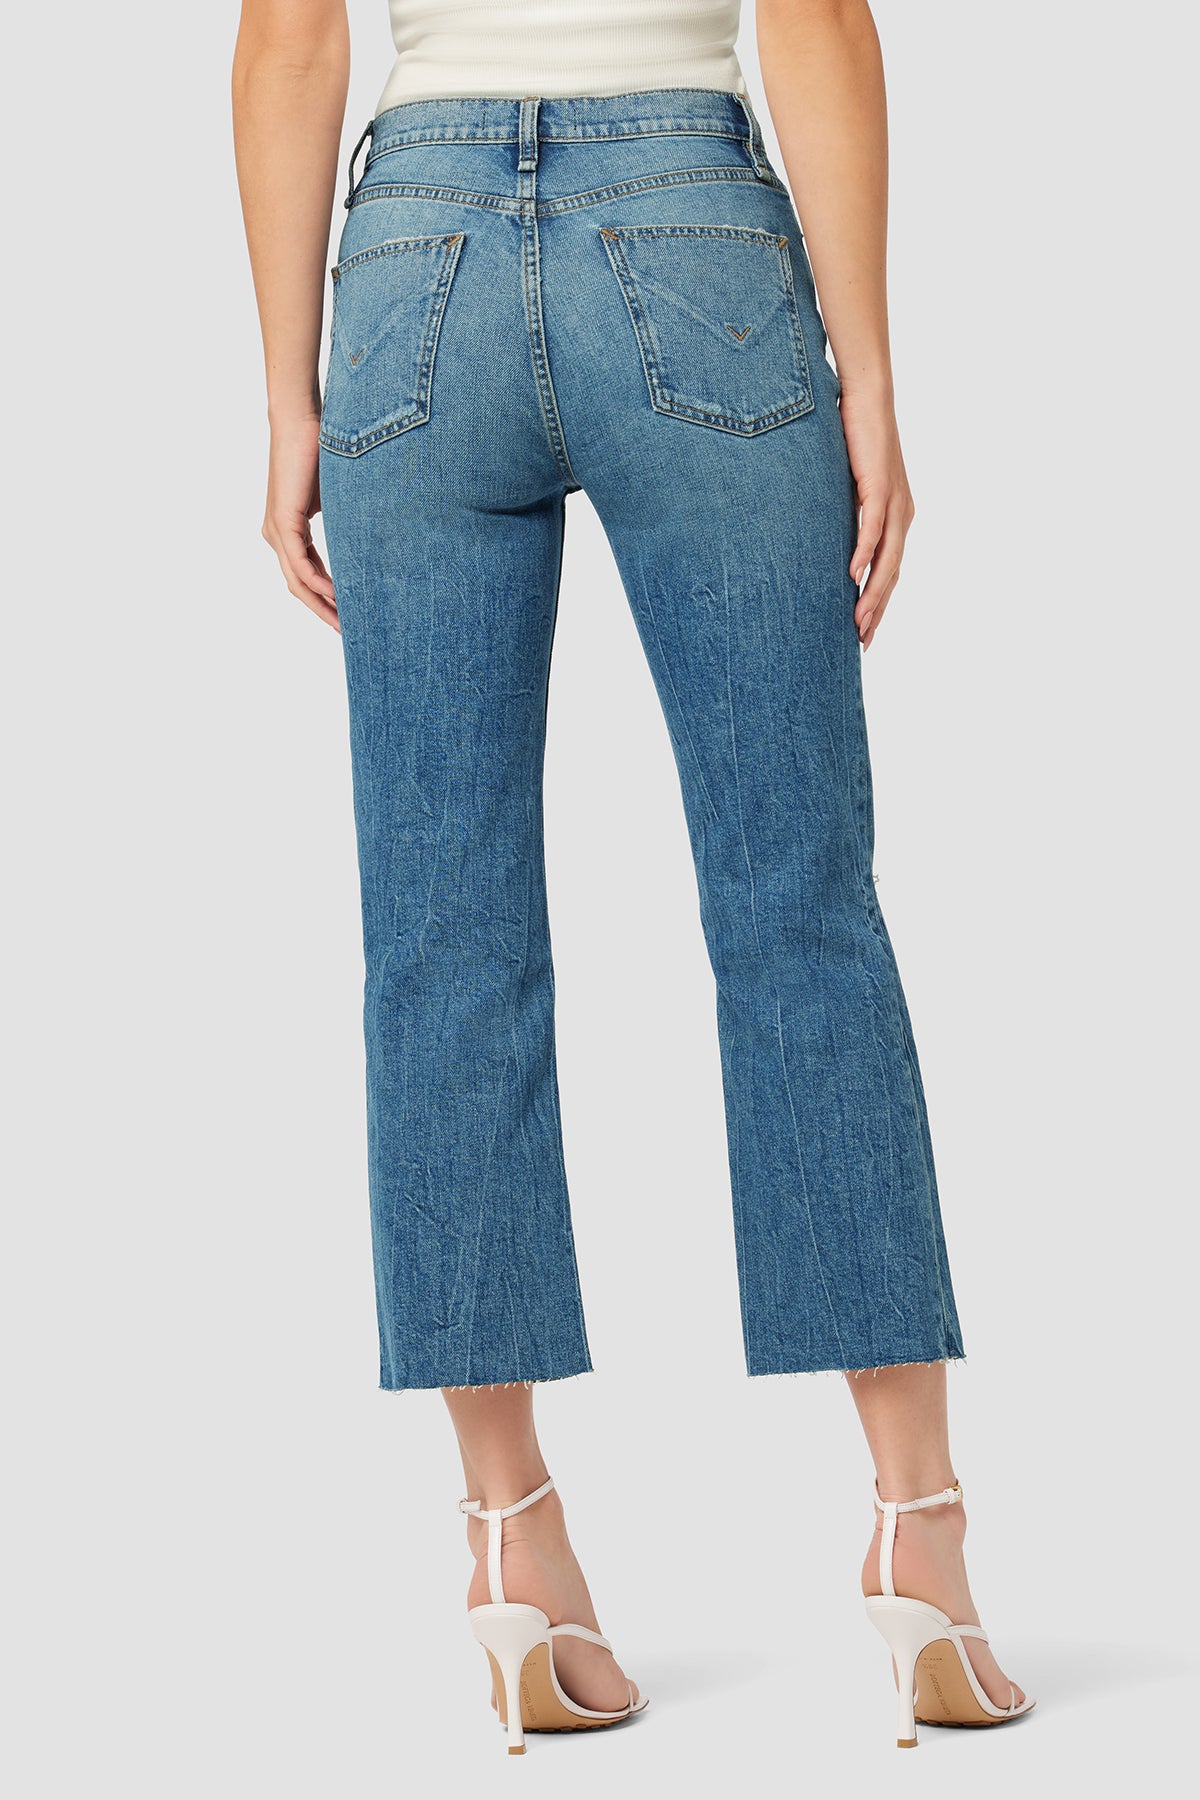 Remi High-Rise Straight Crop Jean